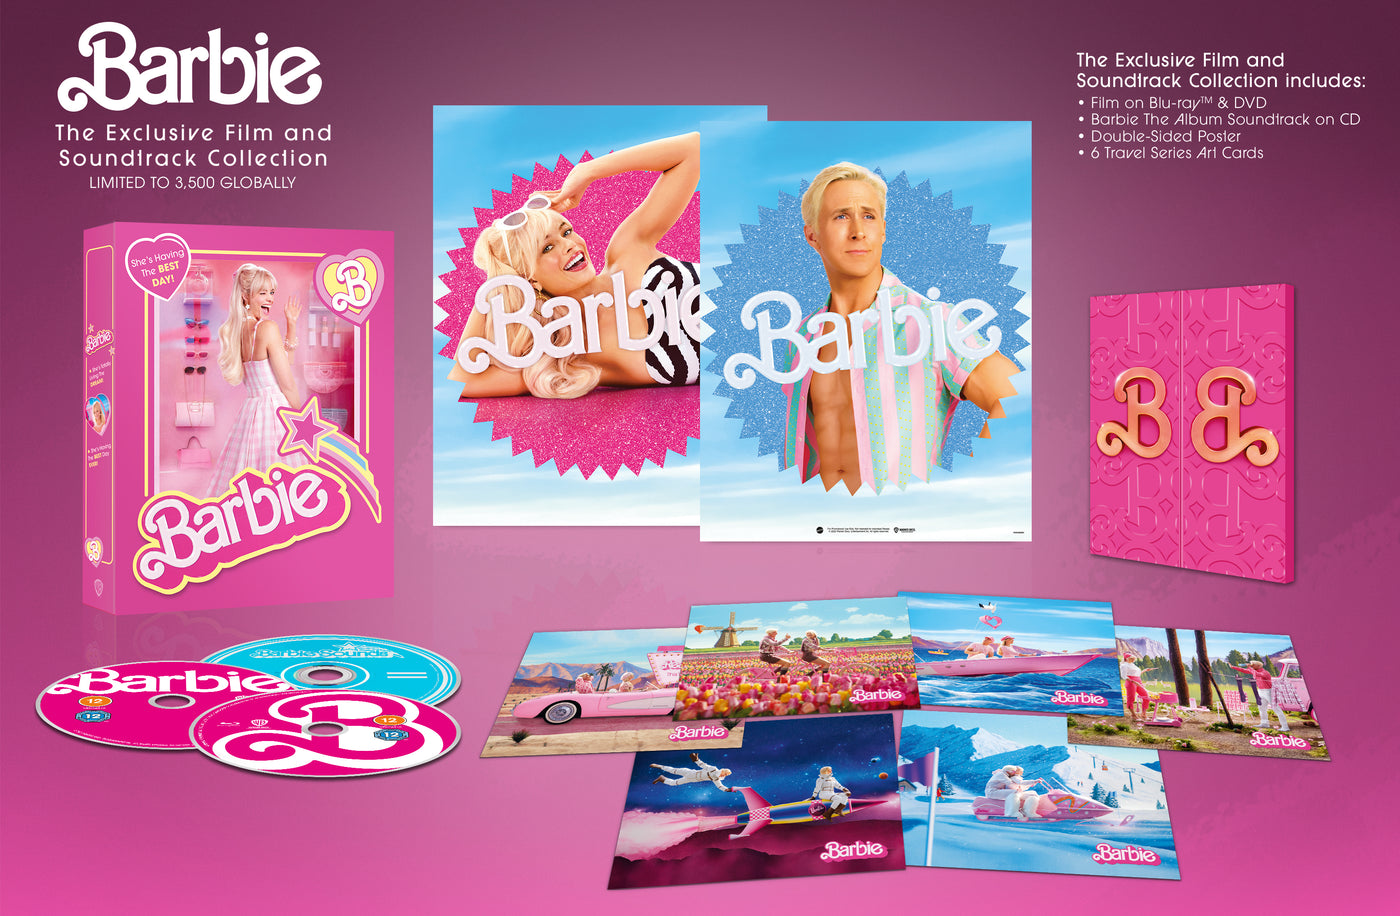 Barbie gift, barbie exclusive gift, barbie album, barbie movie, barbie Christmas gift